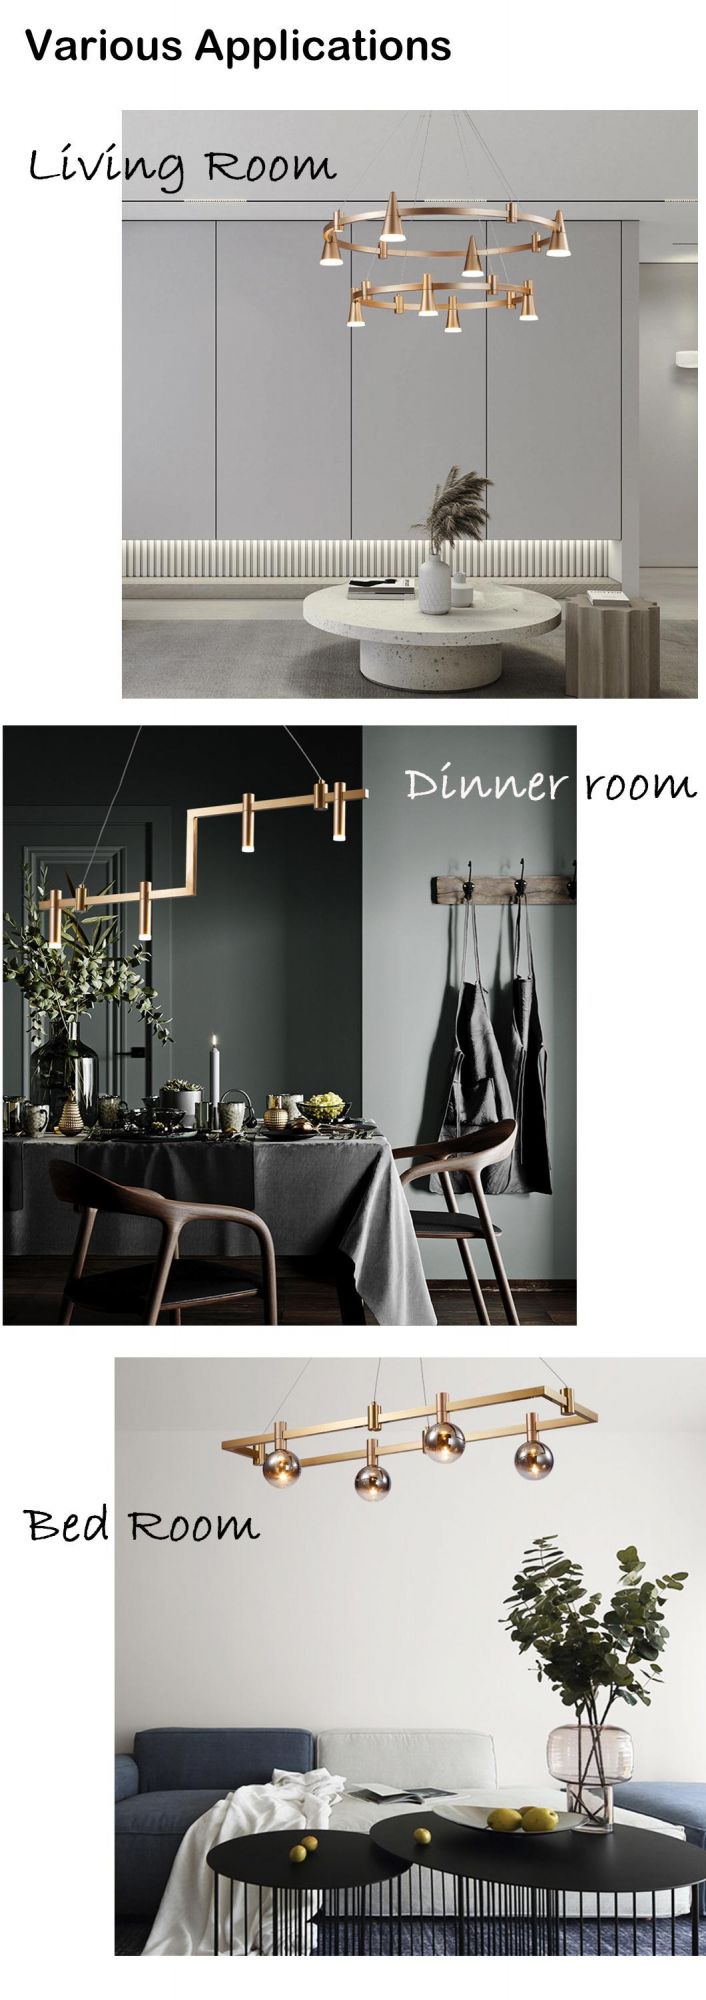 Hot Sales Euro DIY LED Pendant for Living Room, Home, Villa and Hotel Amazing Decoration Modern Chandelier Gold CE ETL Certification